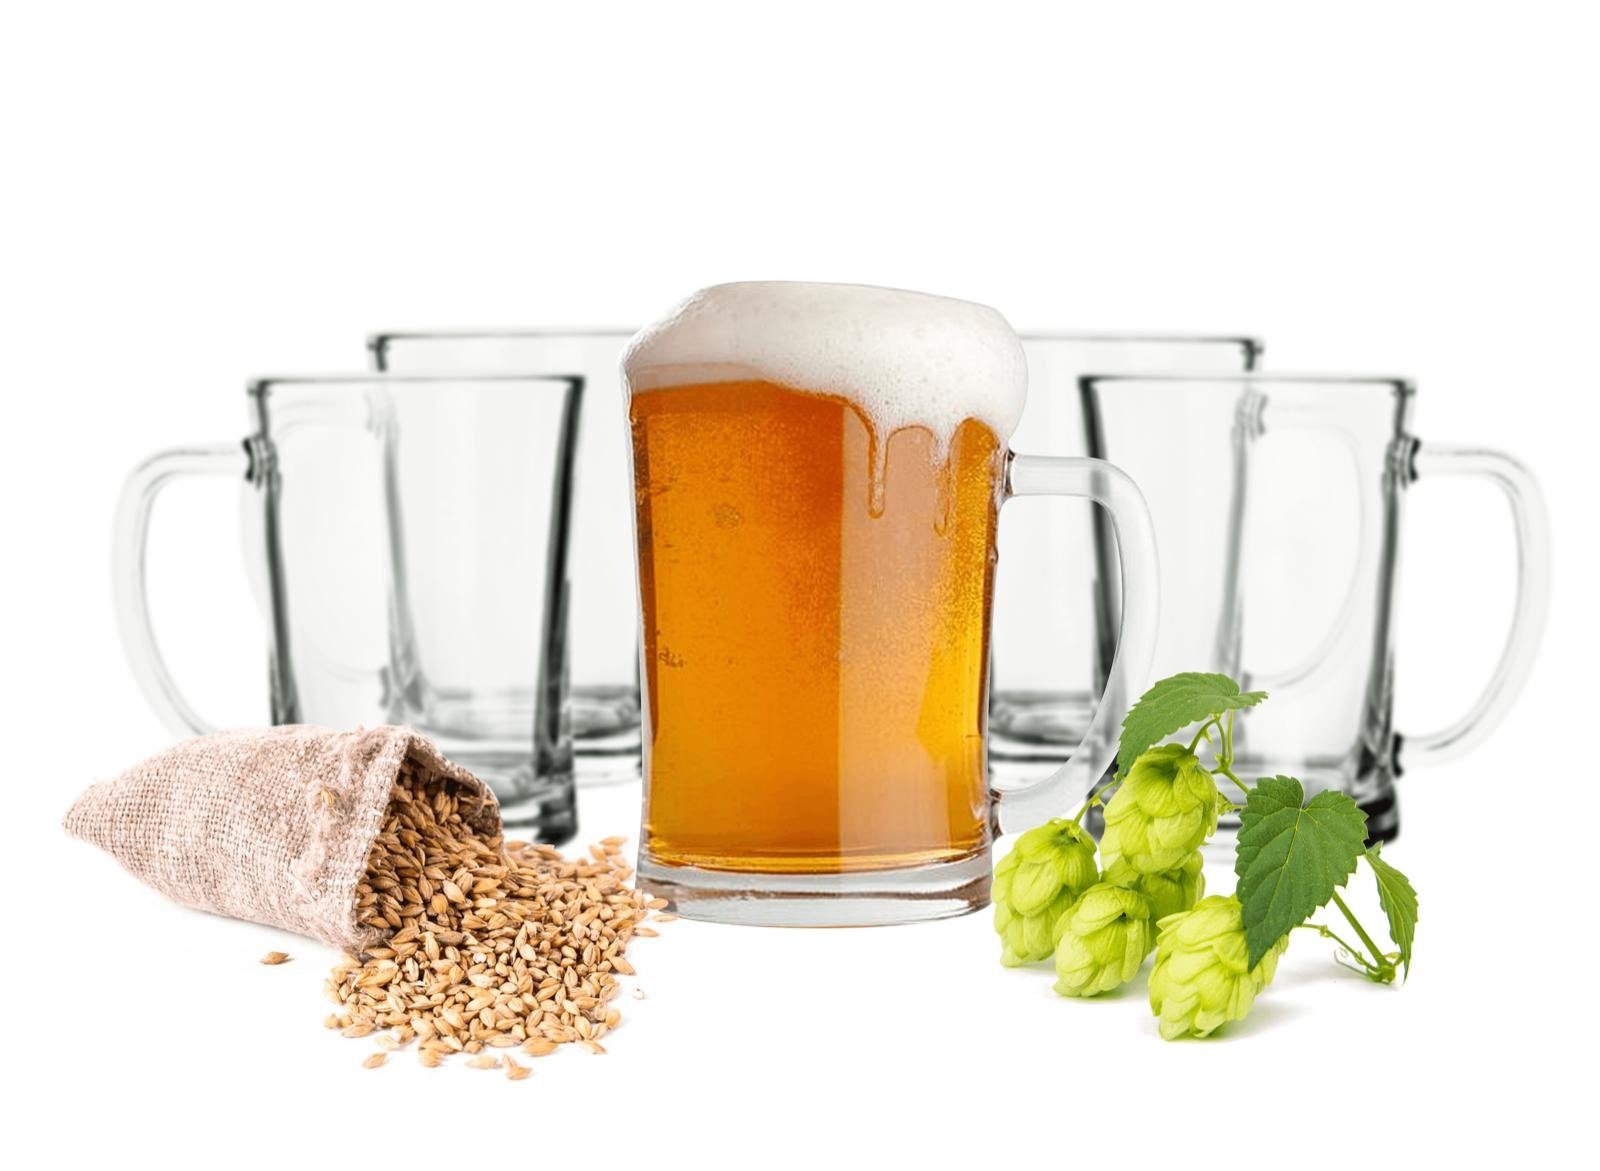 Sendez Bierglas 6 Biergläser mit Henkel 500ml Bierseidel Bierkrüge Bierglas Bierkrug Glas, Glas